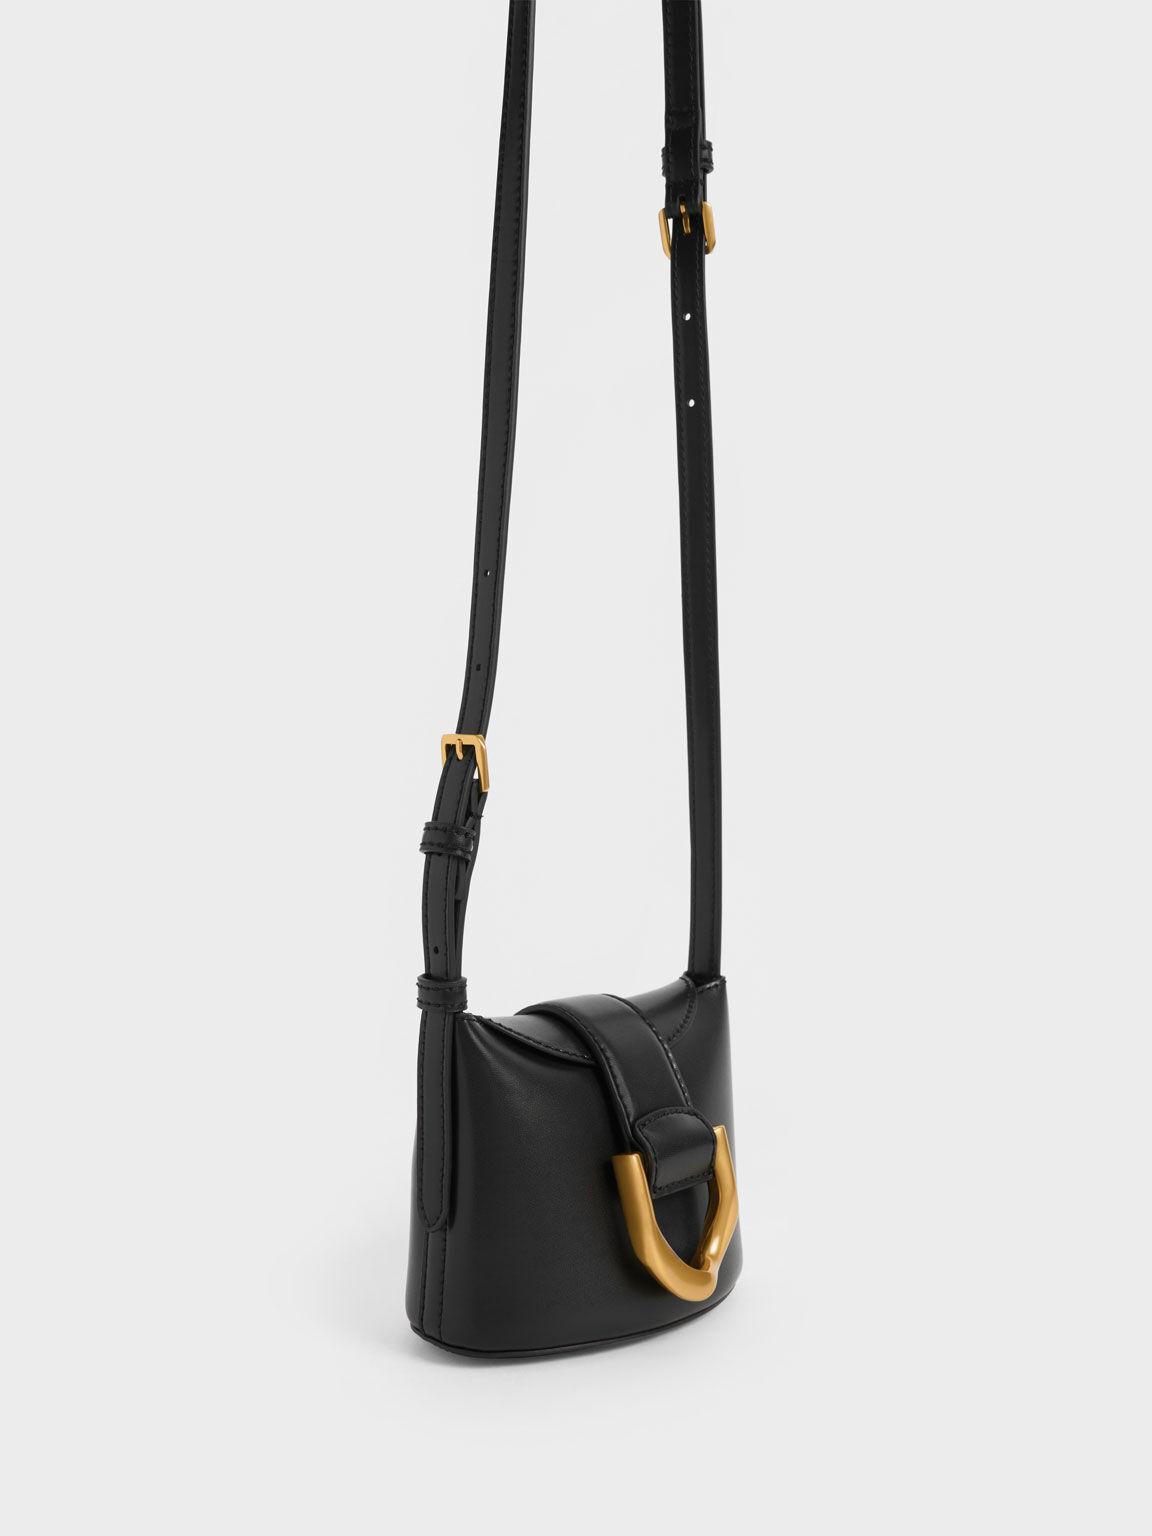 M2269-BK: Ashlyn Rattan Bucket Bag - Black - The Handbag Store